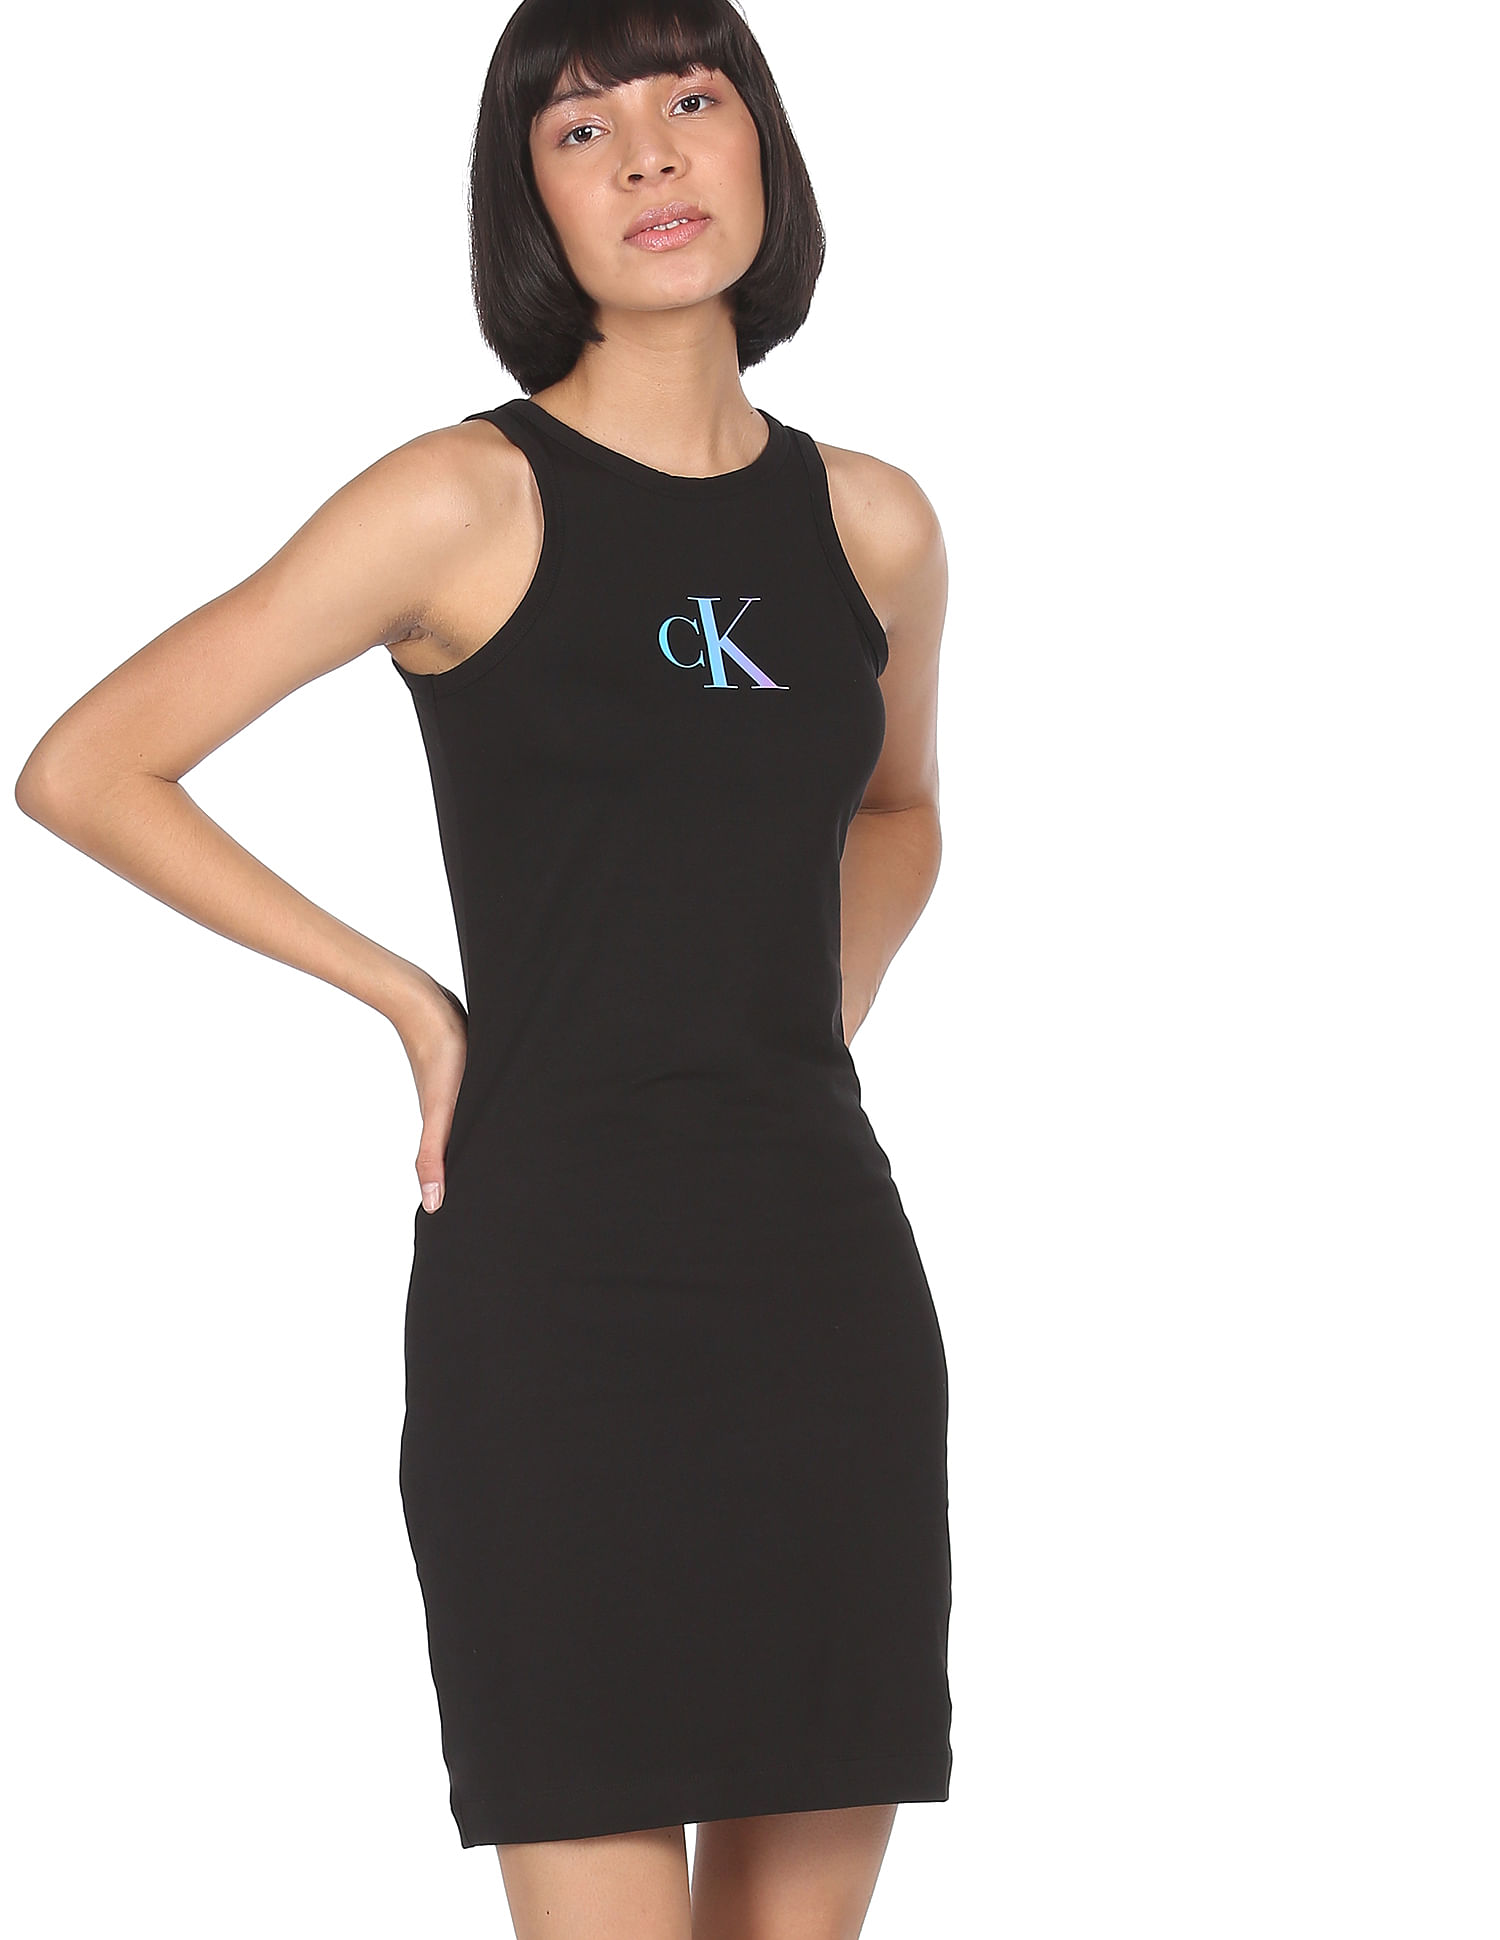 Jeans Racerback Dress Calvin Women Gradient Bodycon Black Buy Logo Klein